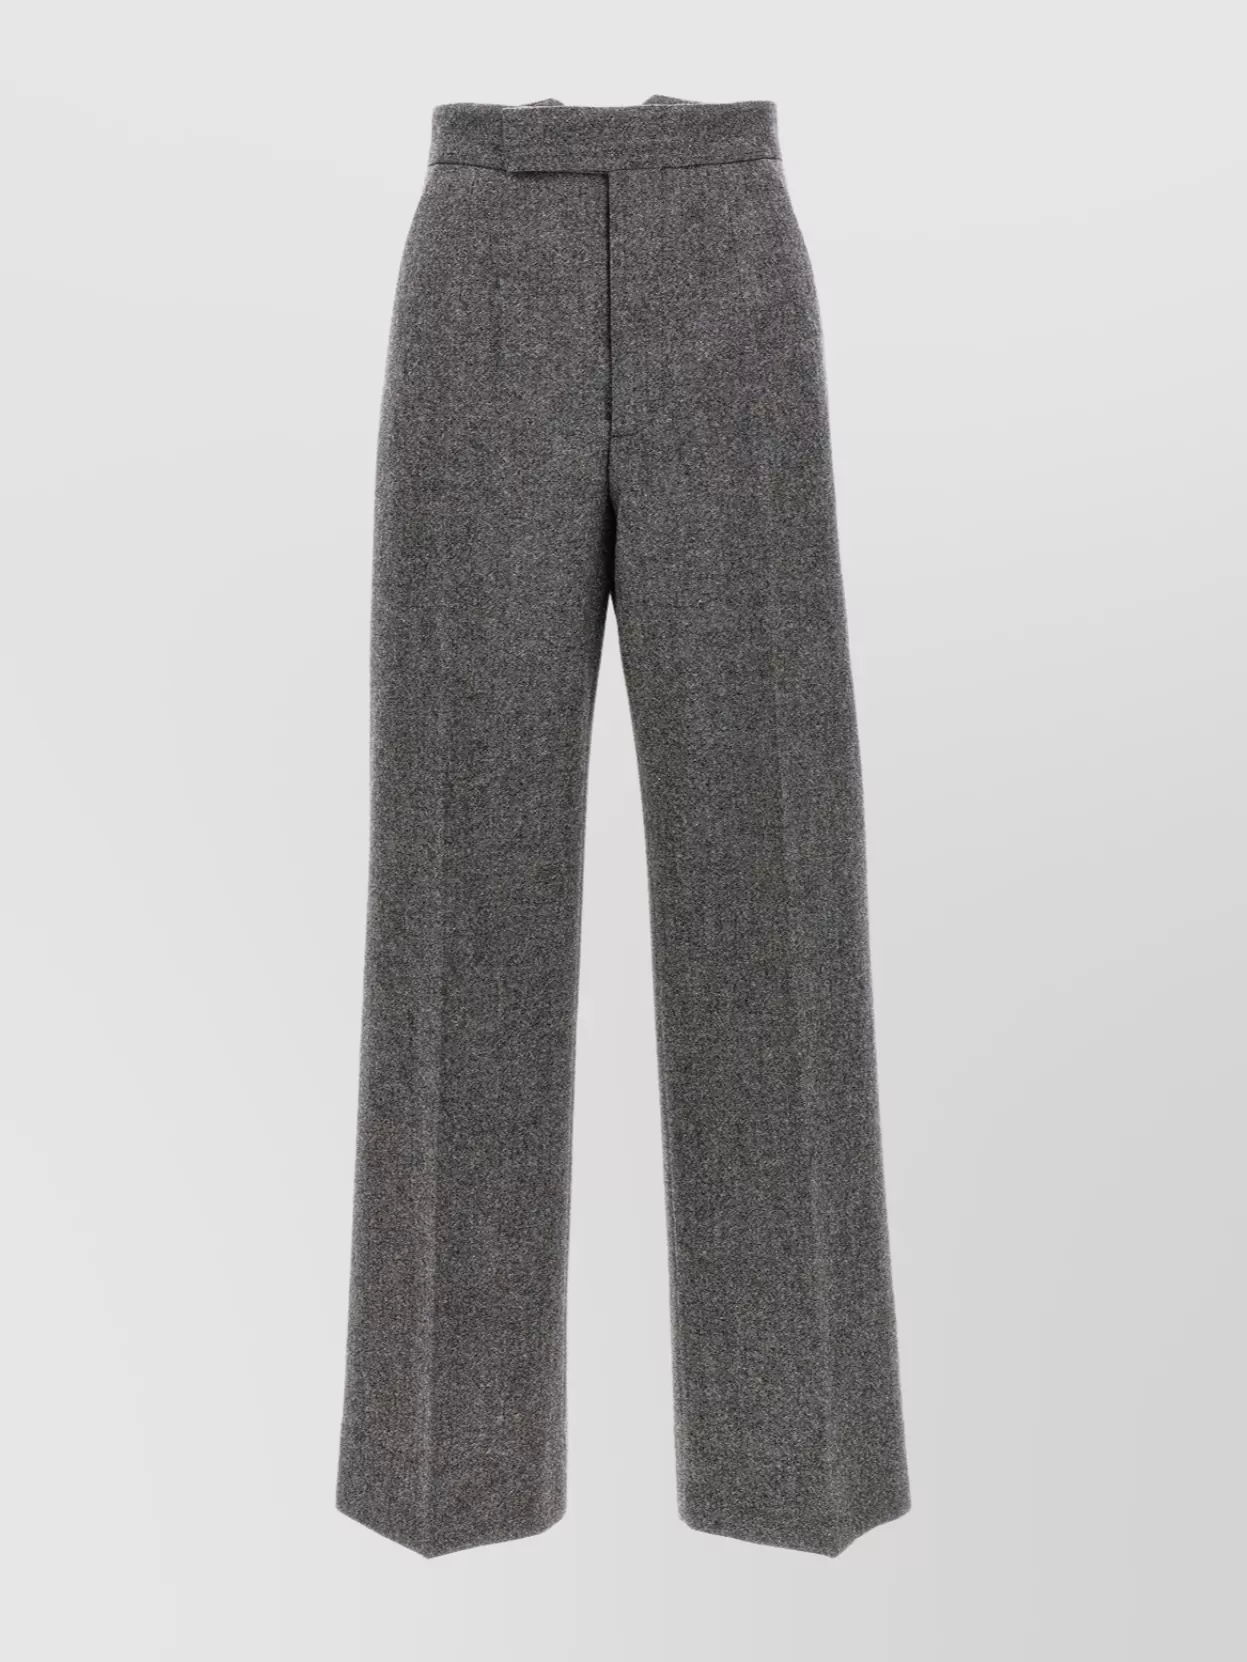 Vivienne Westwood "sophia" High Waist Wide Leg Trousers In Gray